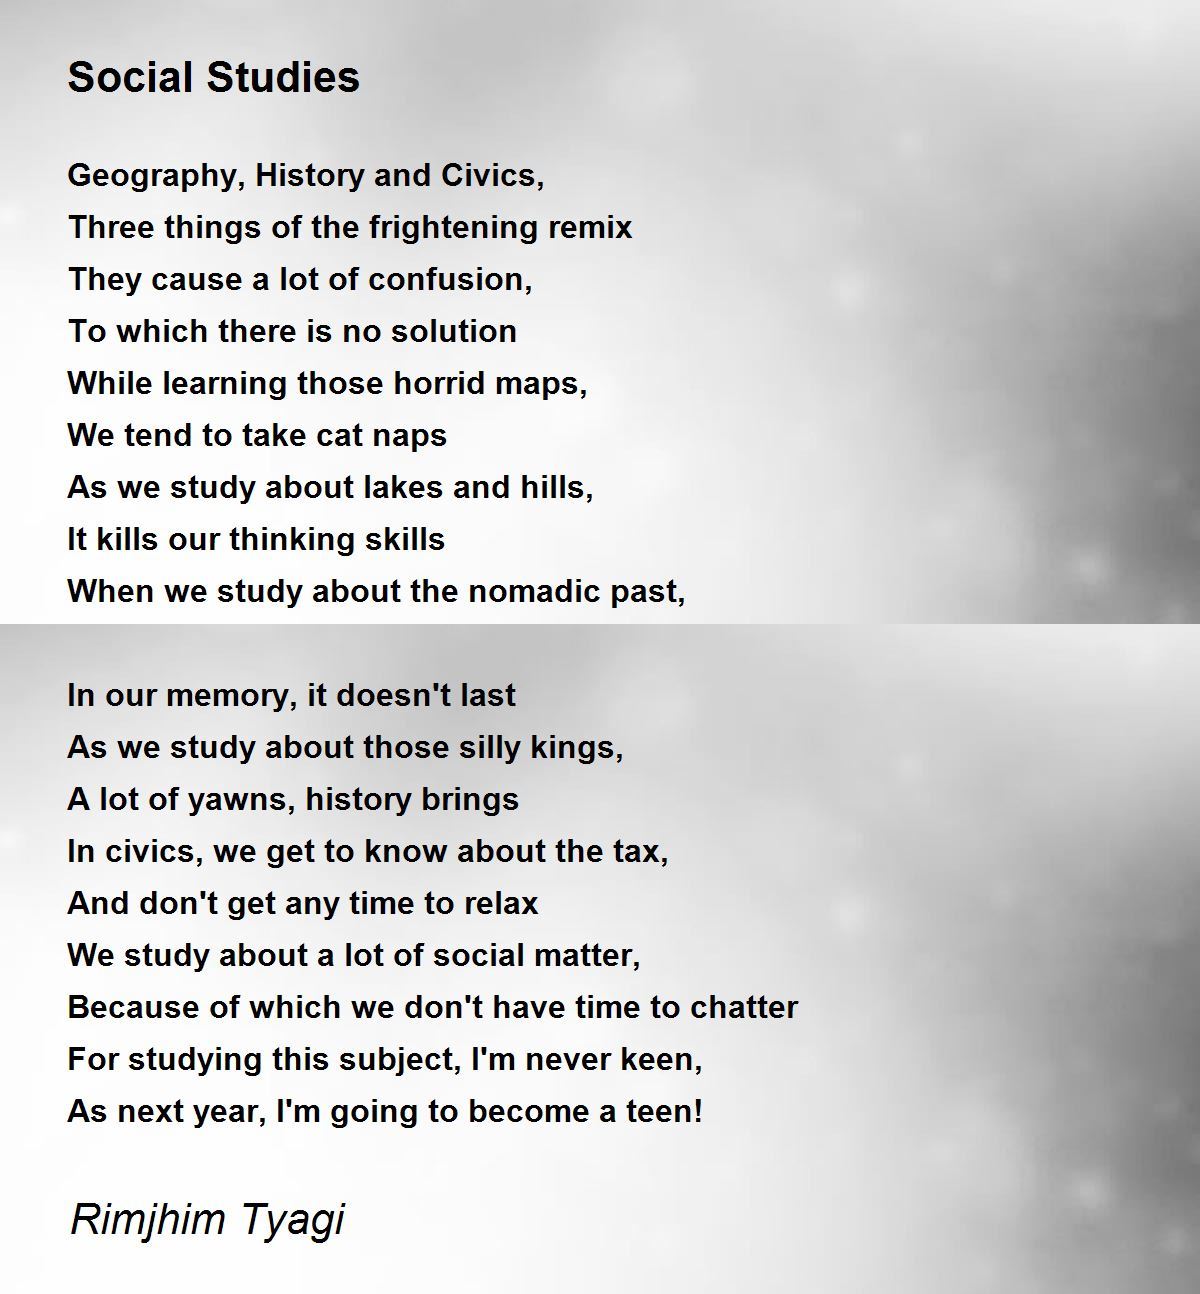 Social Studies - Social Studies Poem by Rimjhim Tyagi